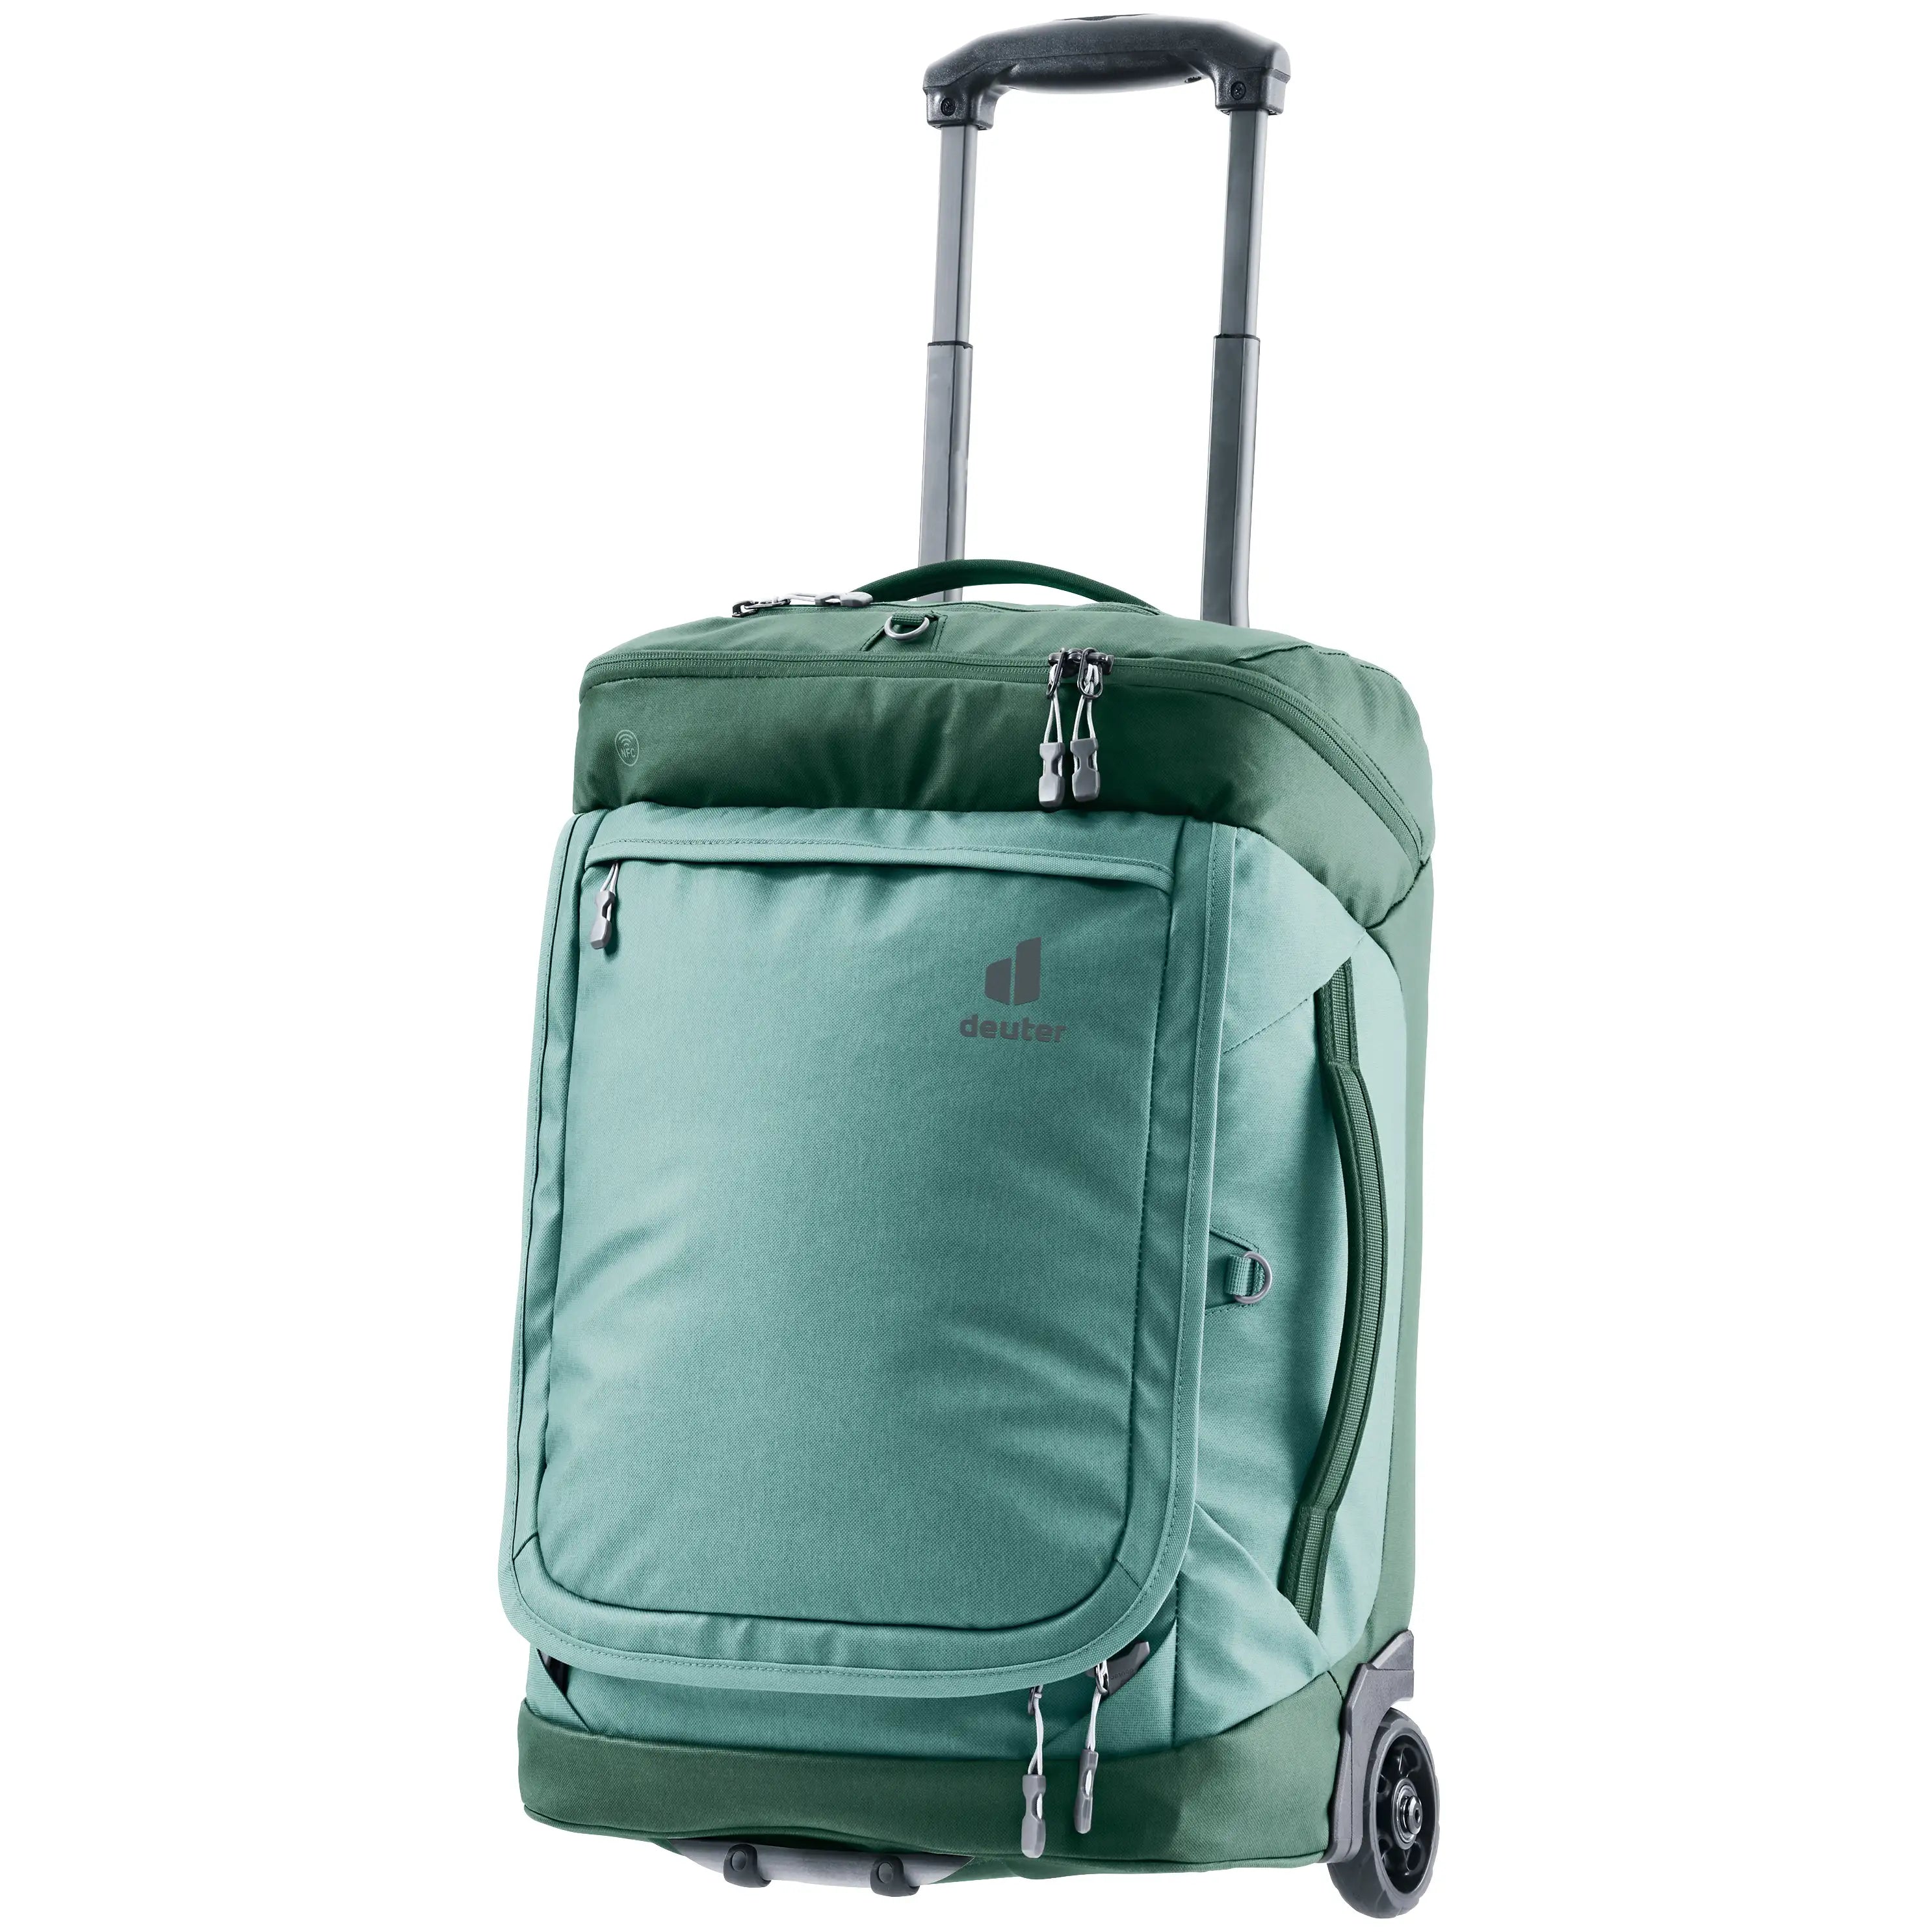 Deuter Travel Aviant Duffel Pro Movo 36 Travel Bag 52 cm - Jade-Seagreen